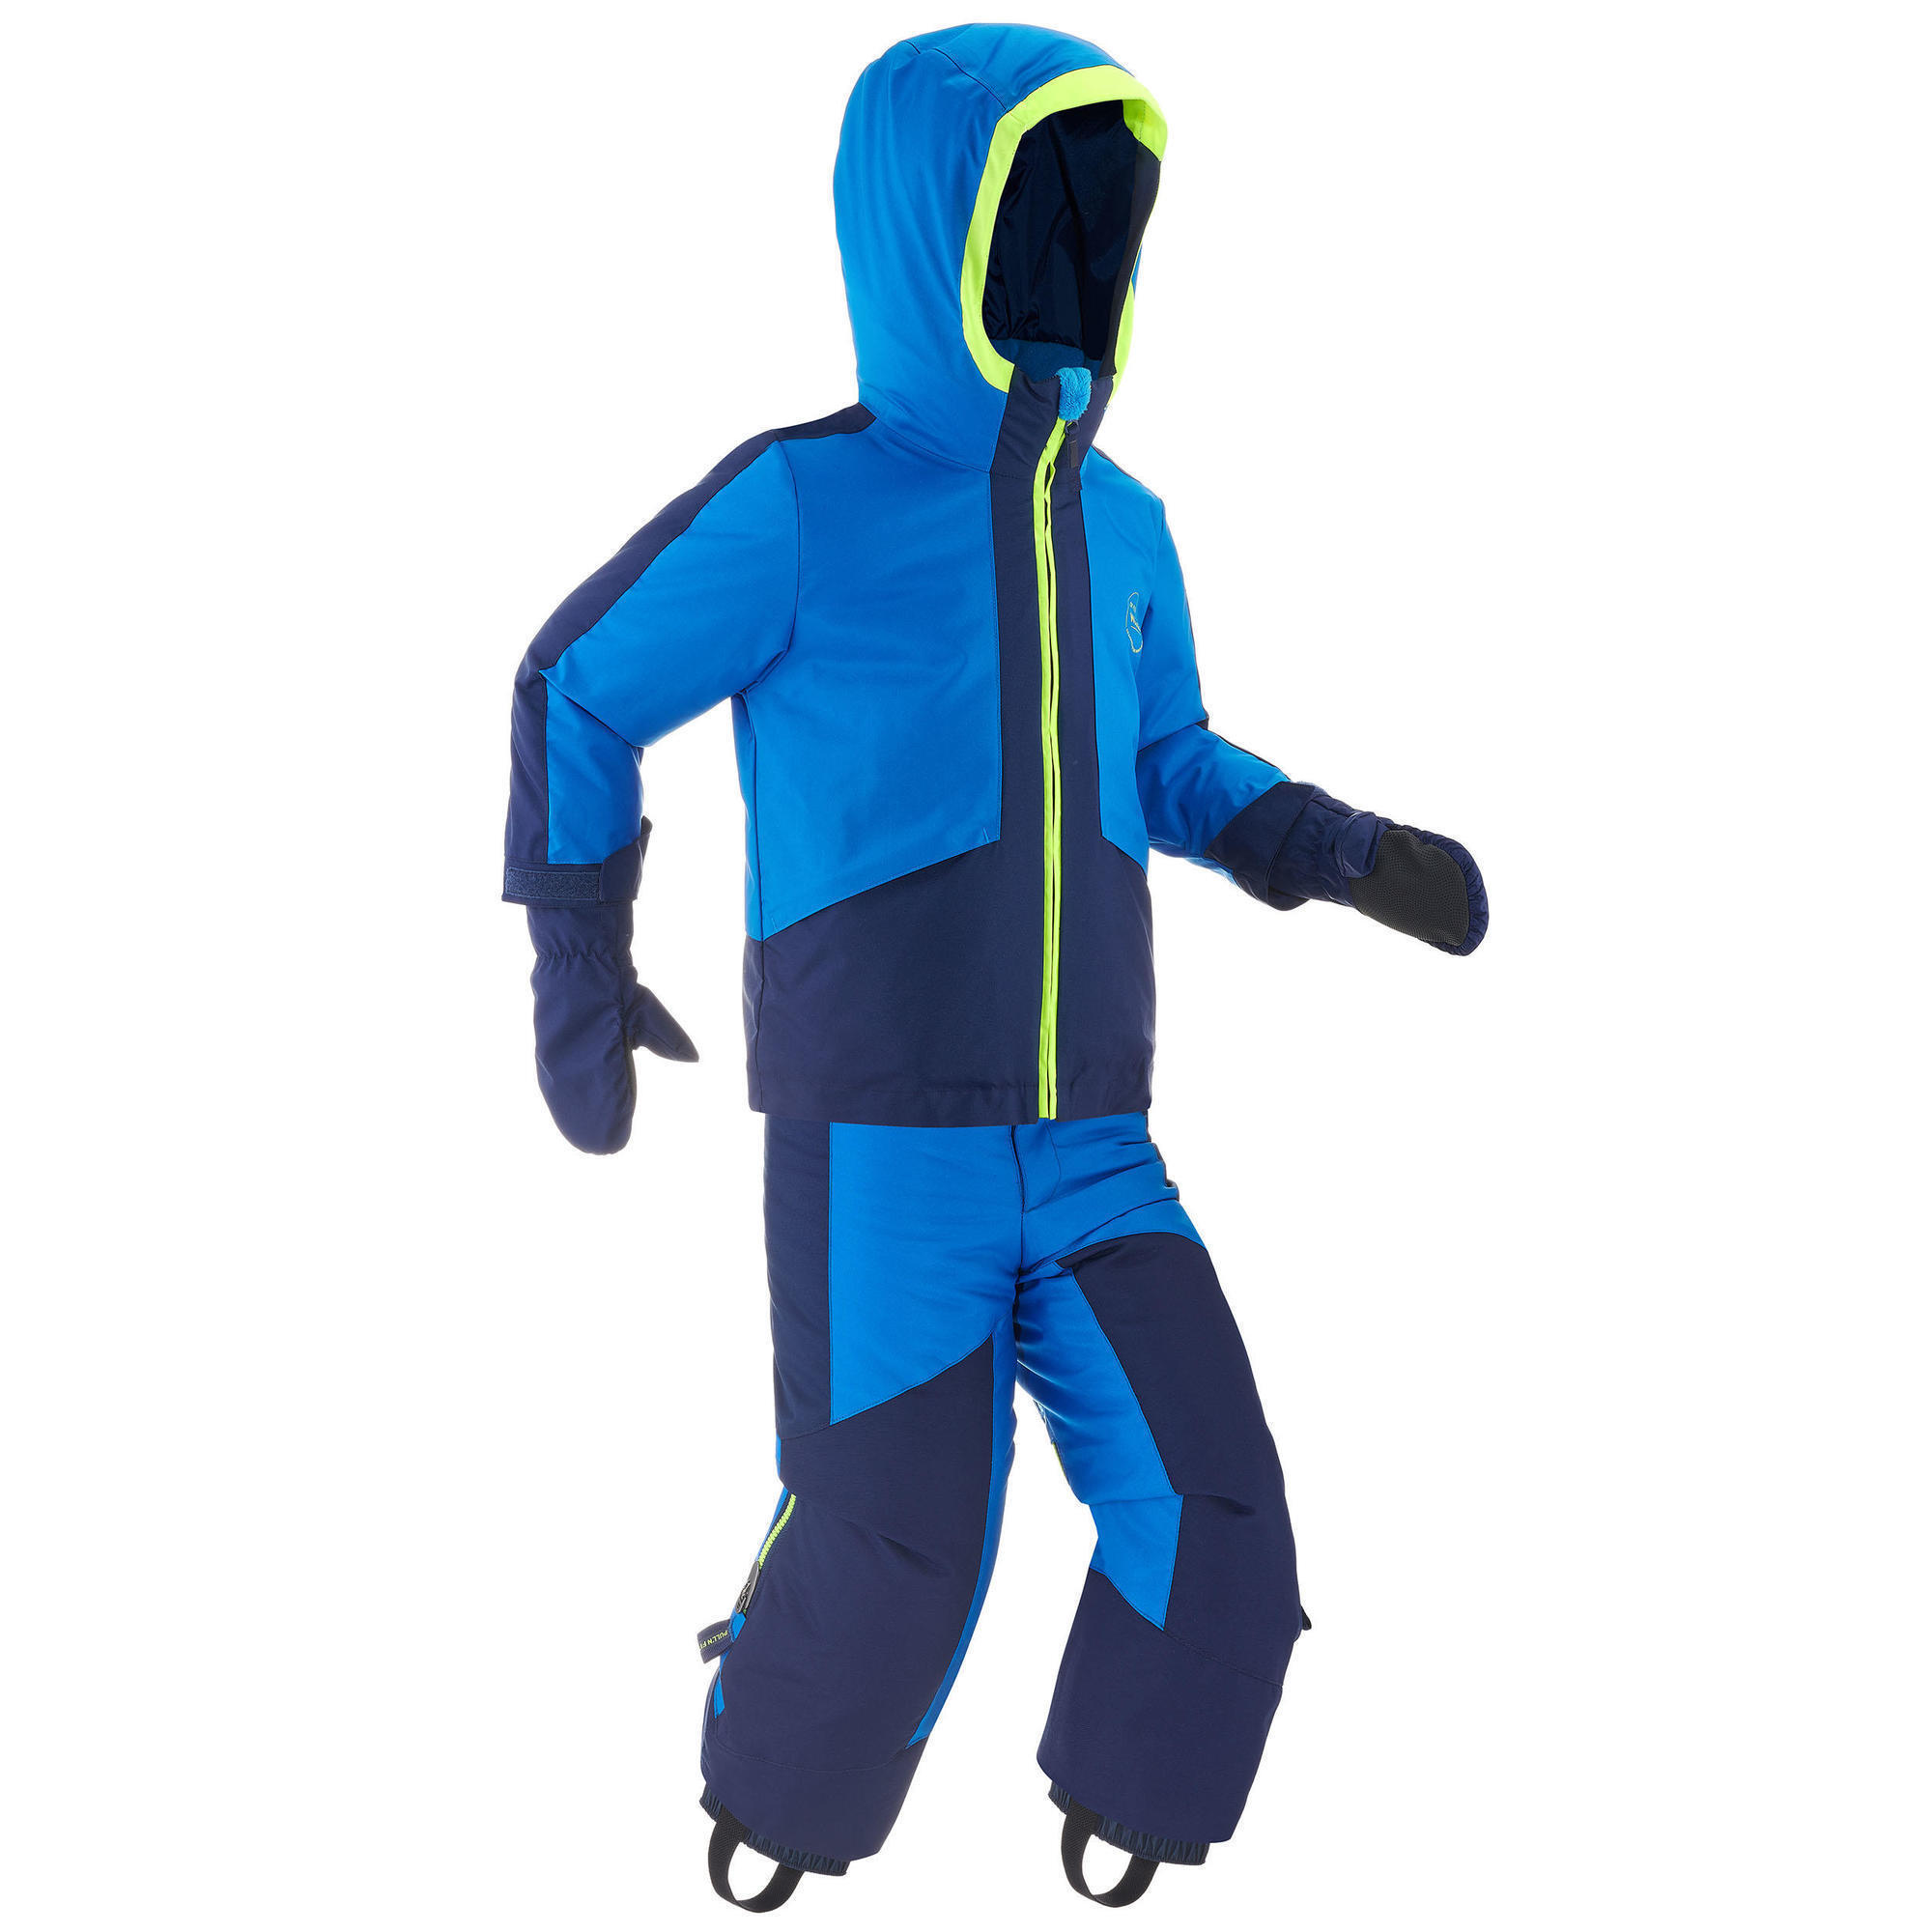 Kids’ Warm and Waterproof Ski Suit 580 - Blue 2/19